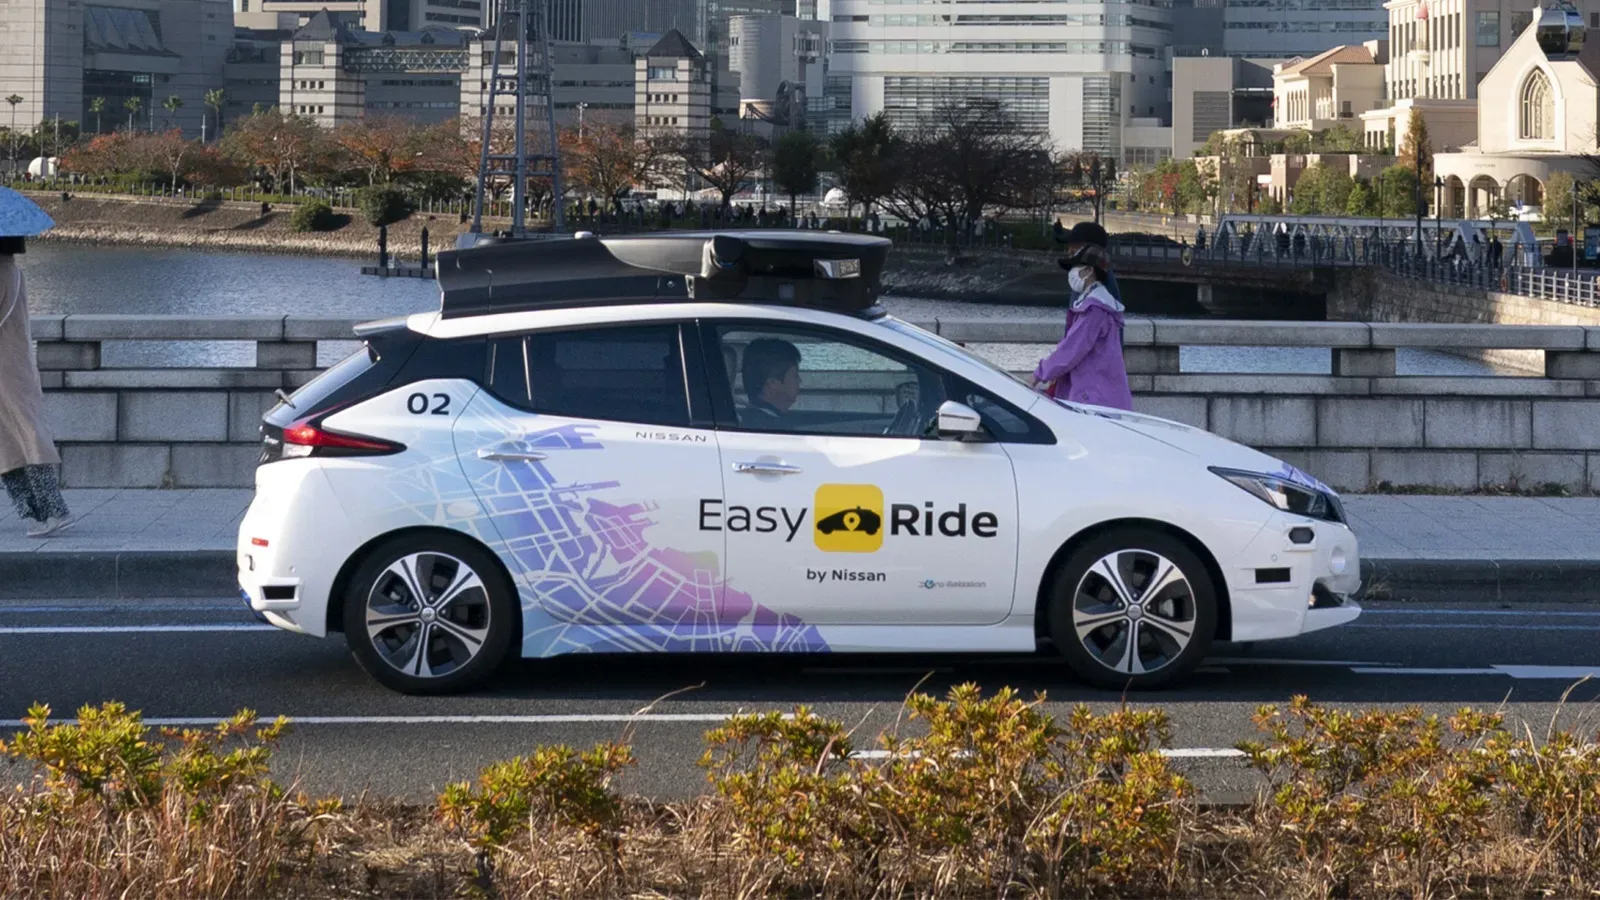 Ninssan Easy Ride autonomous vehicle